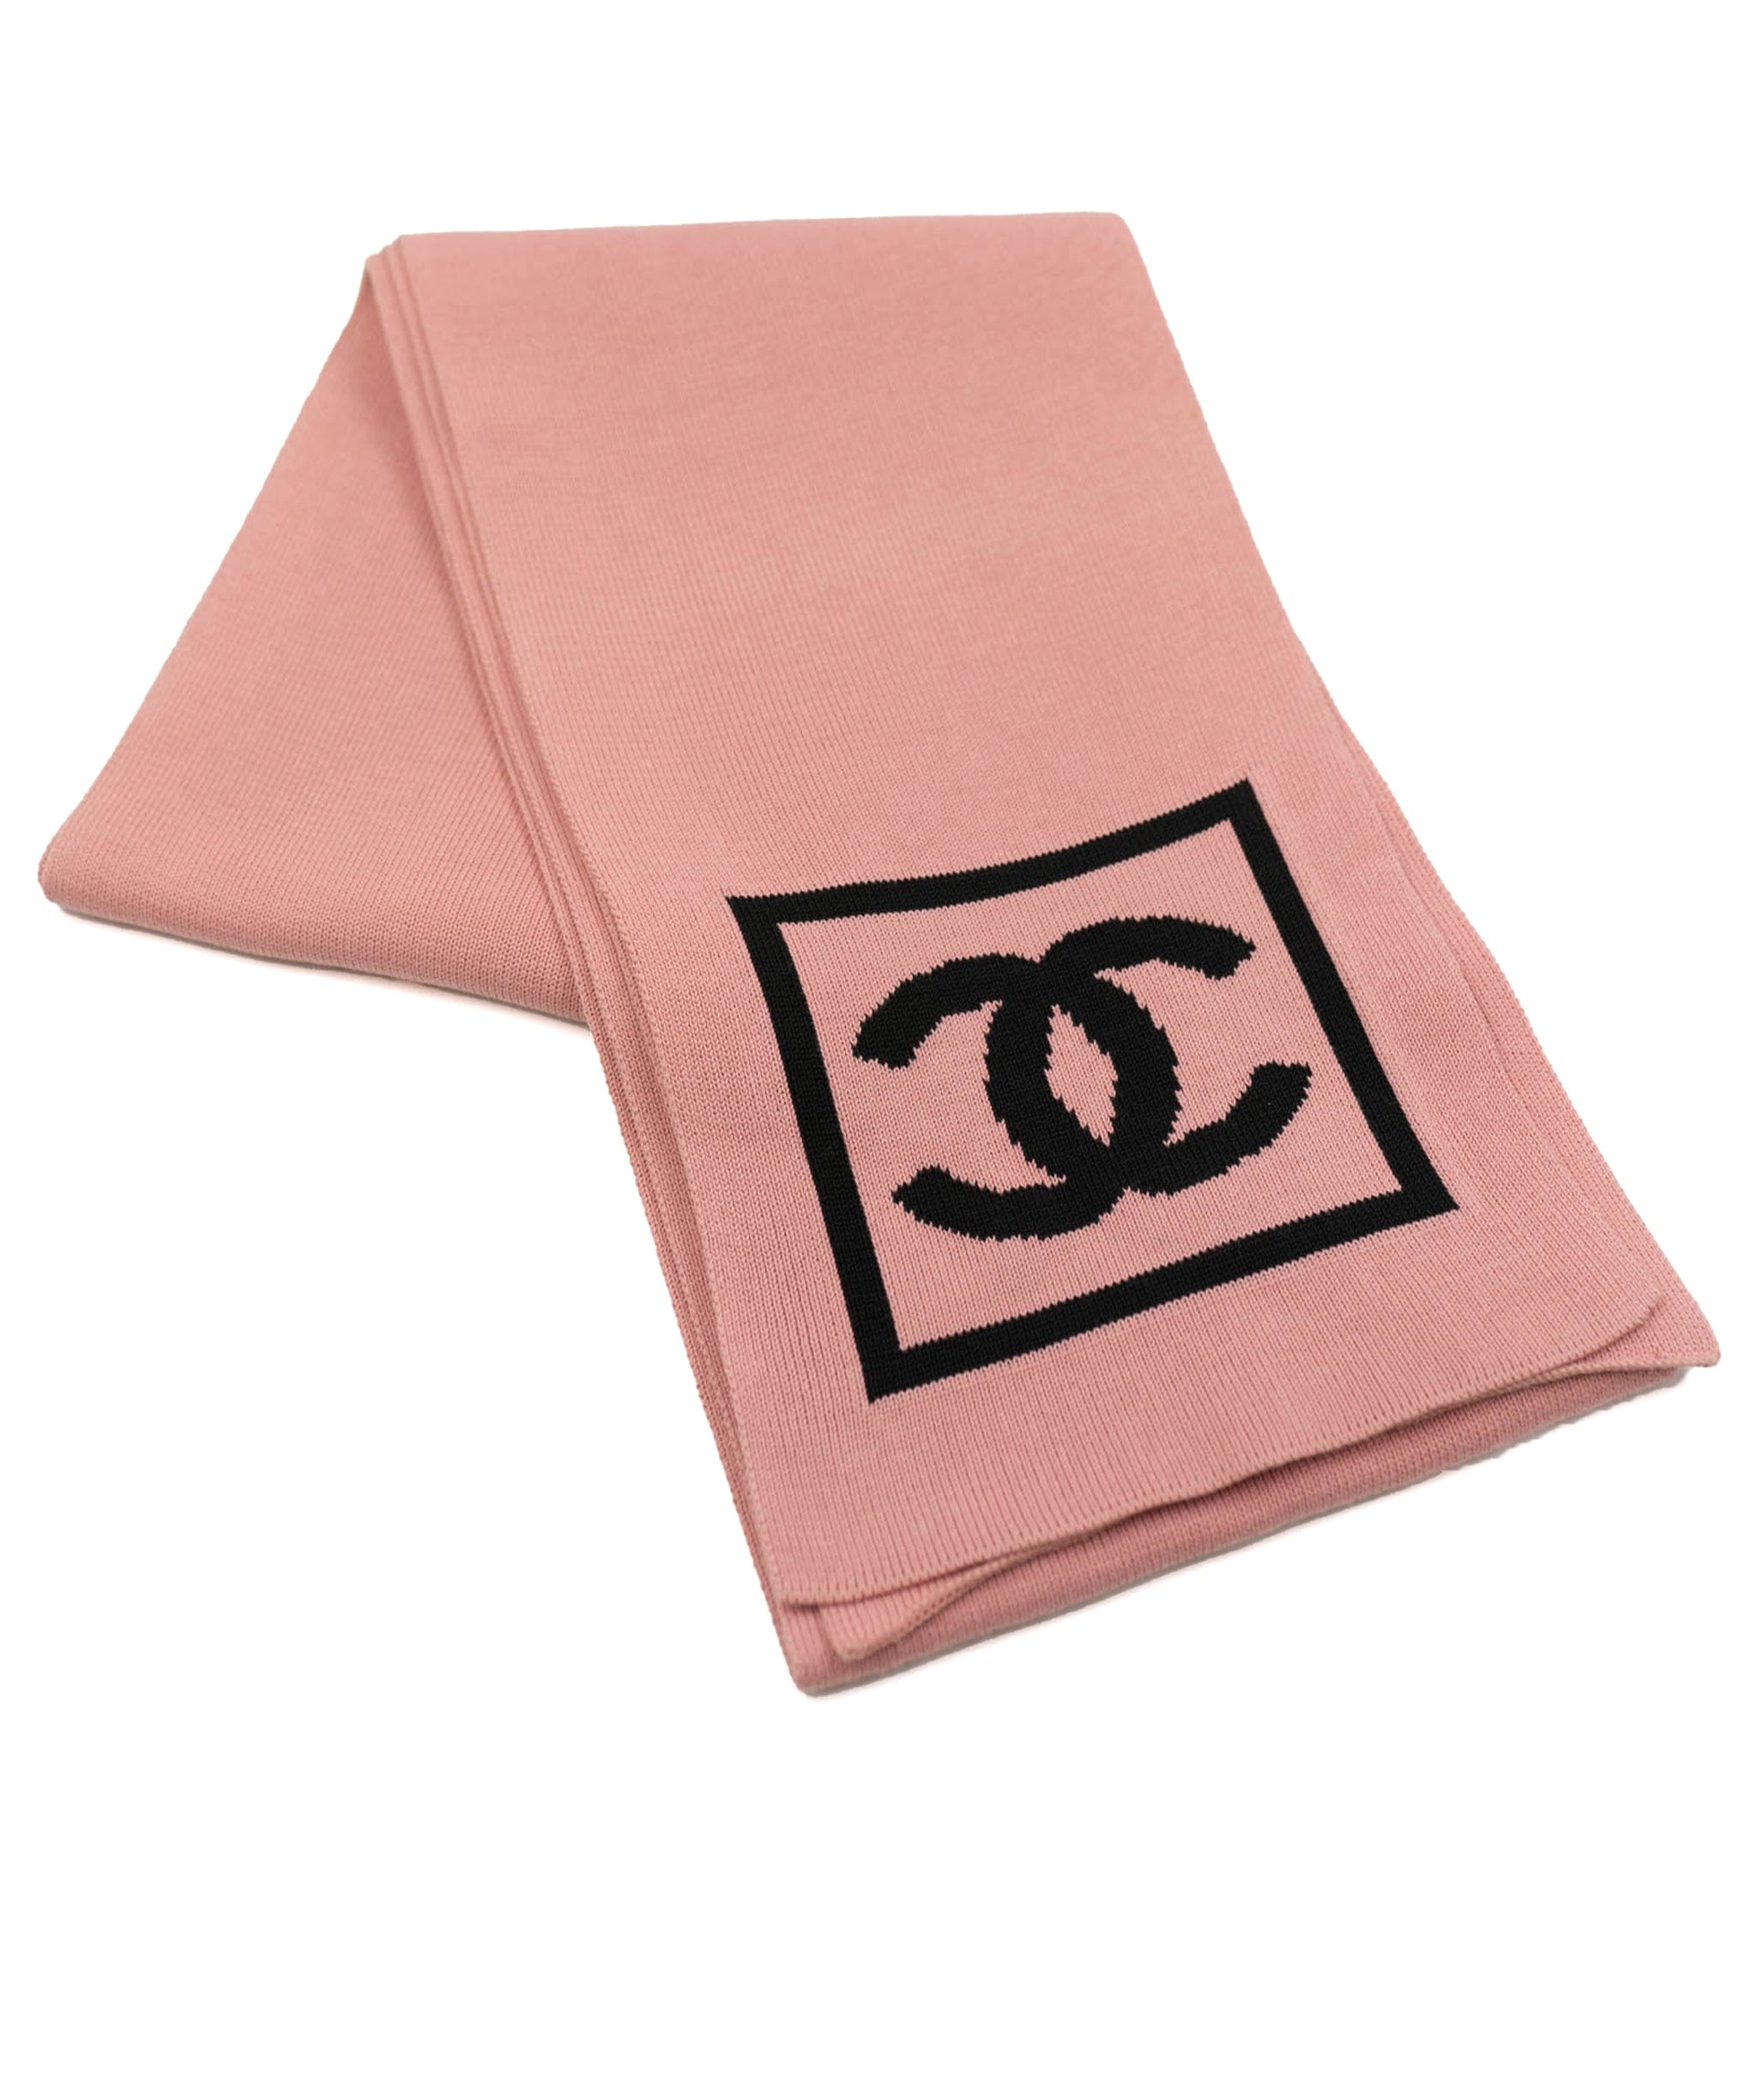 chanel towels